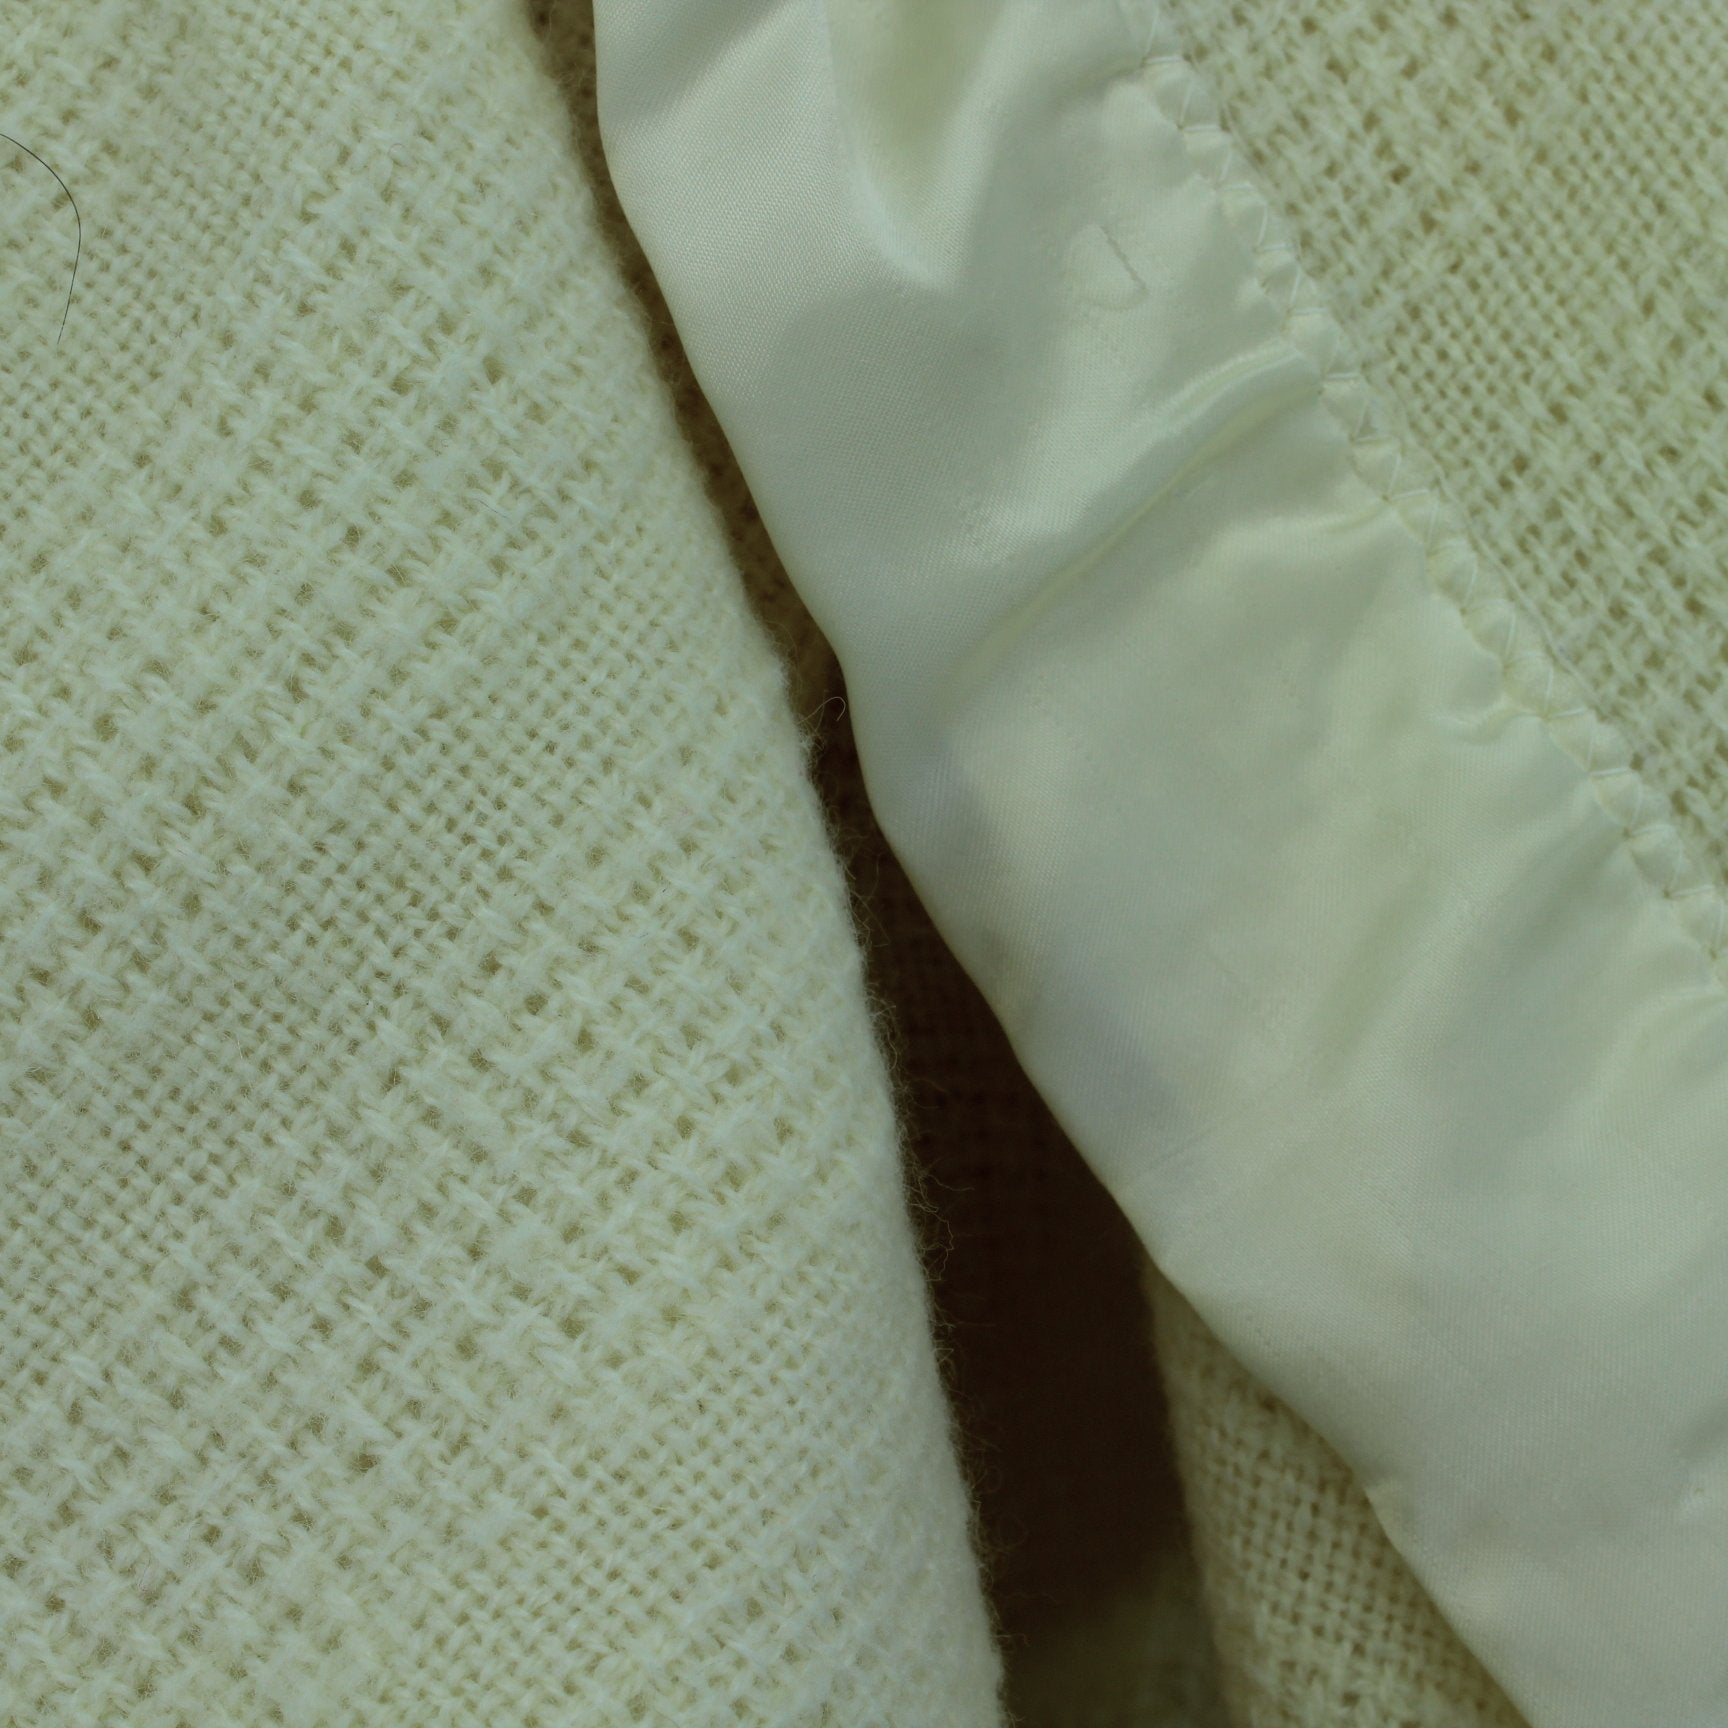 Faribault Faribo Washable Wool Blend Blanket Ivory Basketweave 102" X 87" closeup of fiber